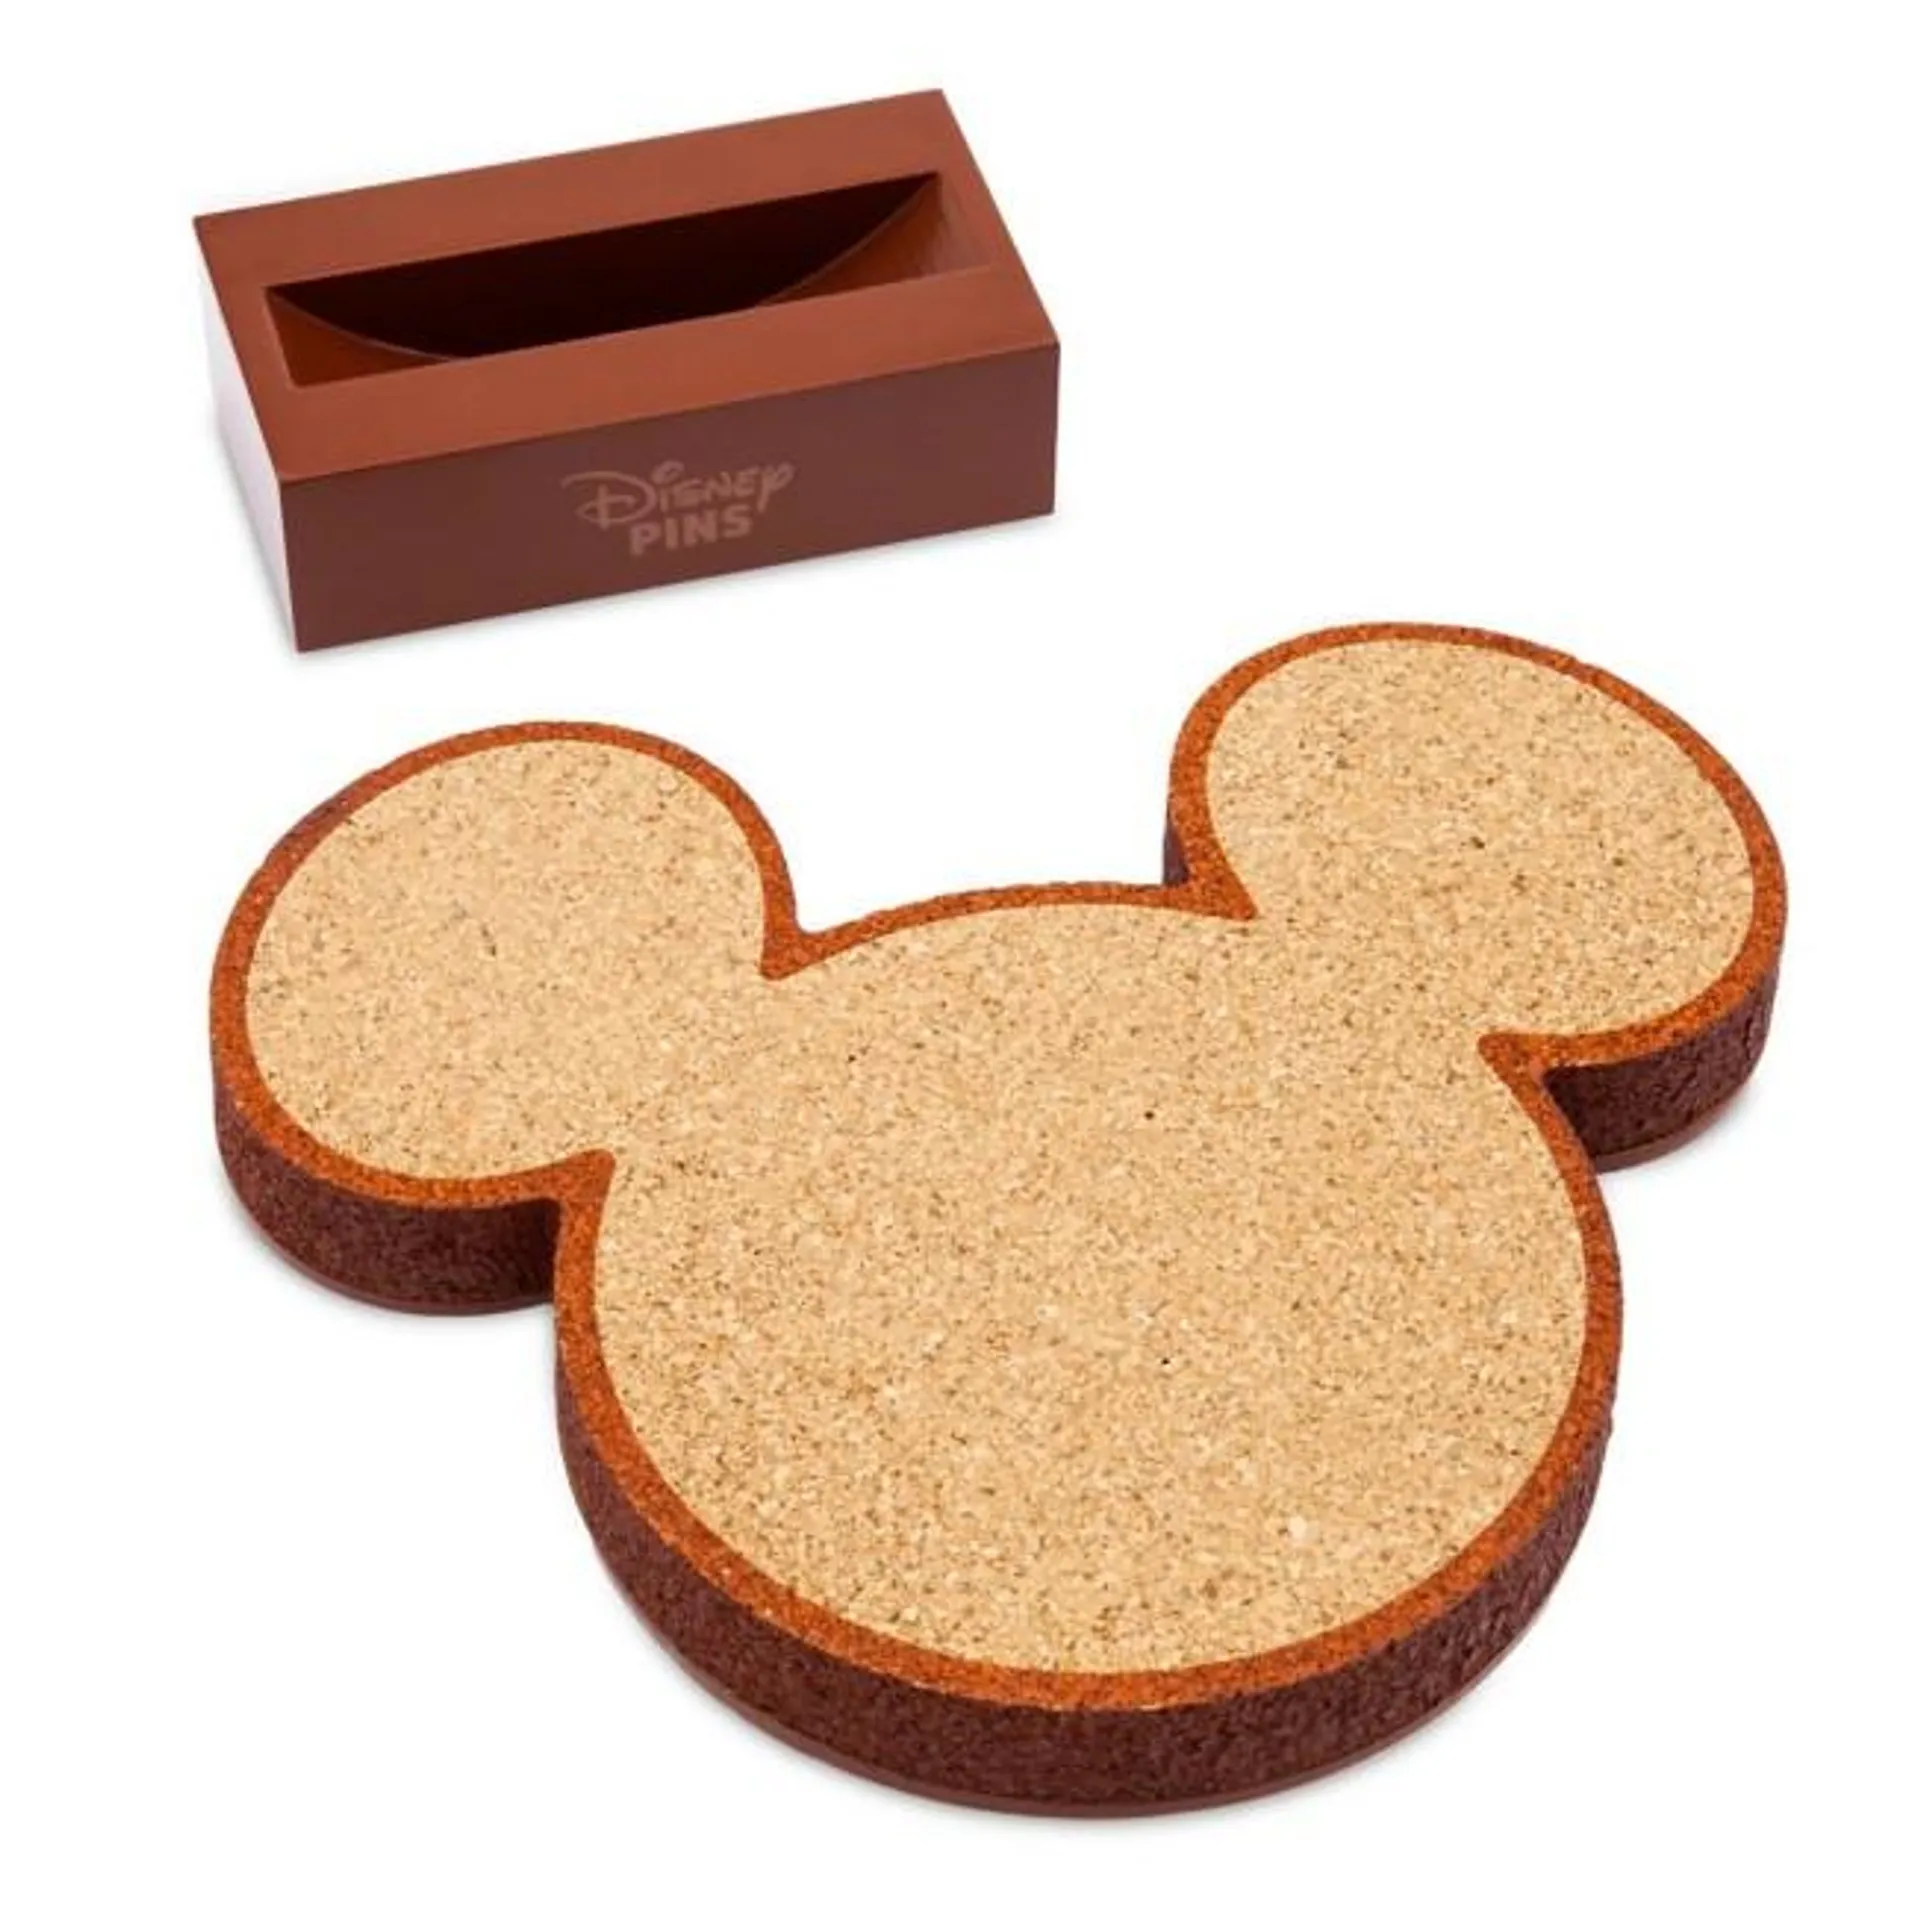 Mickey Mouse Icon Pin Board, Small